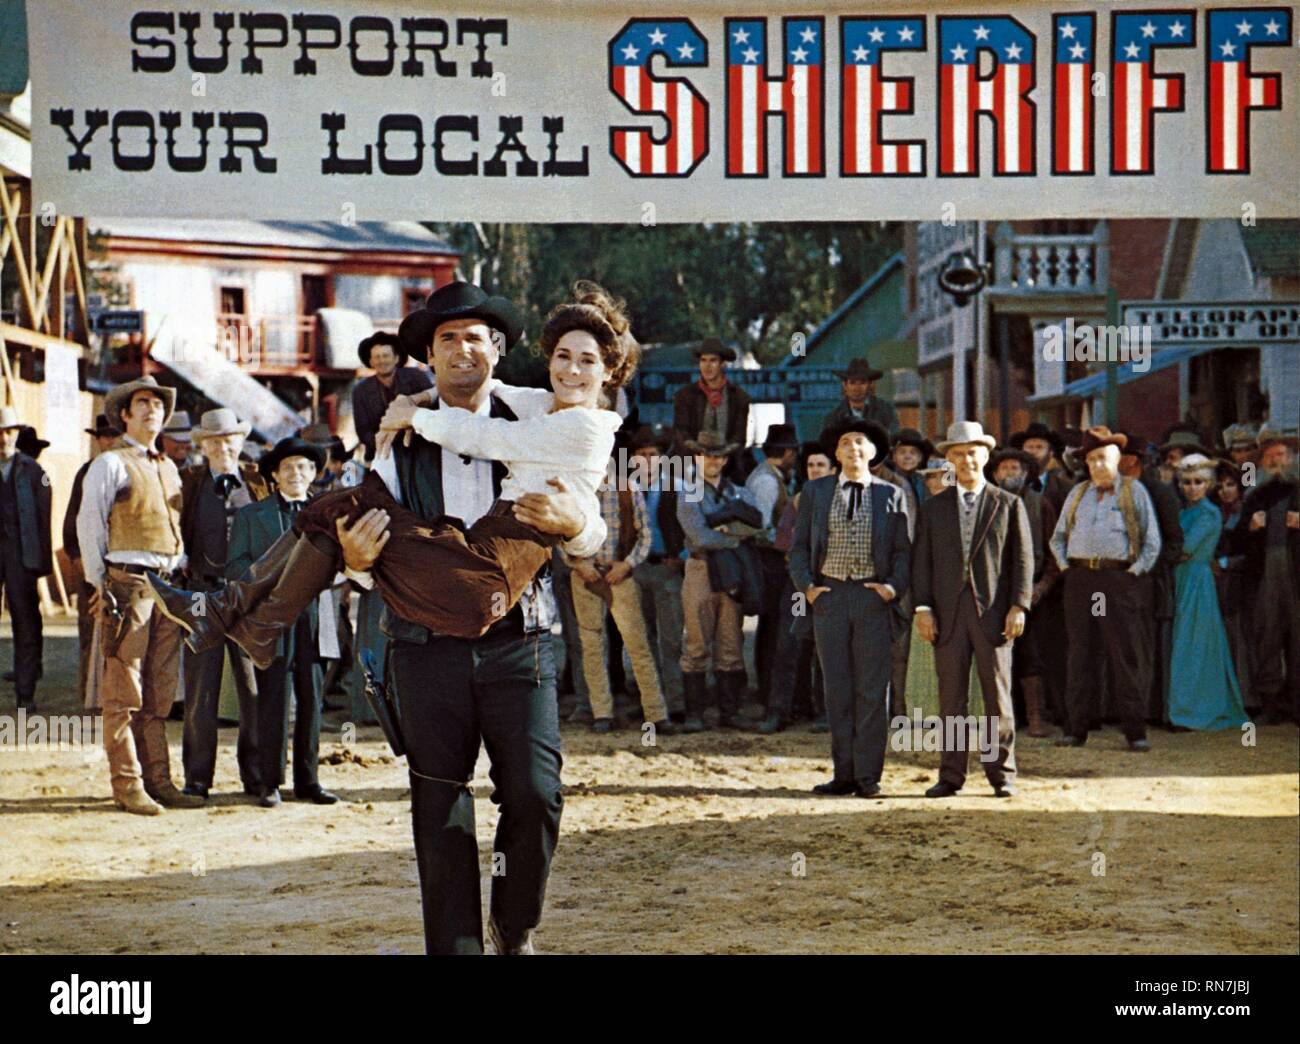 GARNER,HACKETT, SUPPORT YOUR LOCAL SHERIFF!, 1969 Stock Photo - Alamy